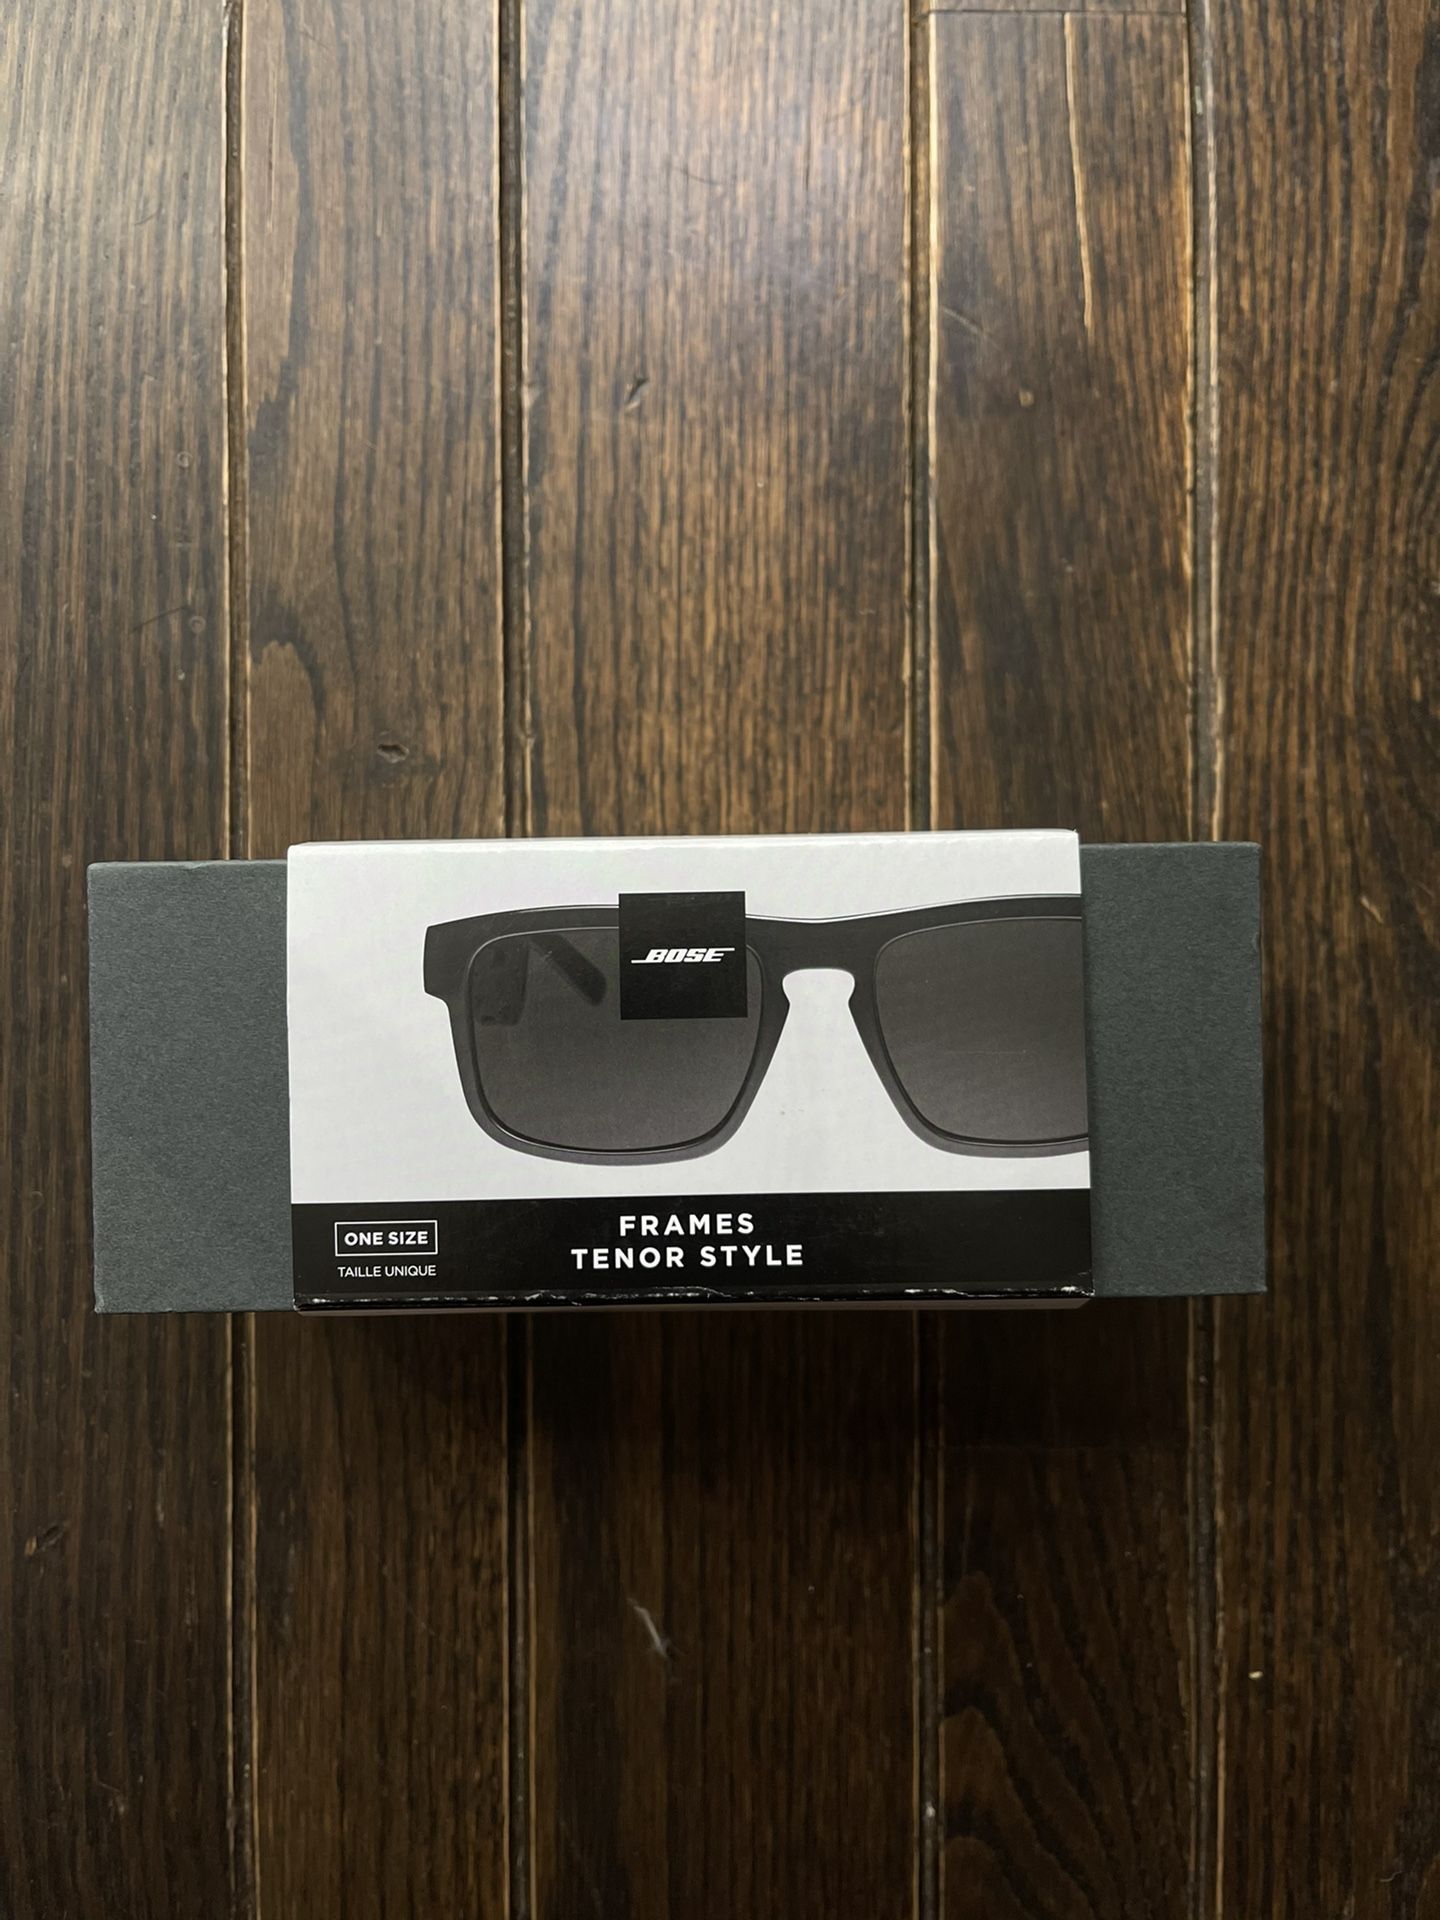 Bose Frames Tenor Style - Audio Sunglasses